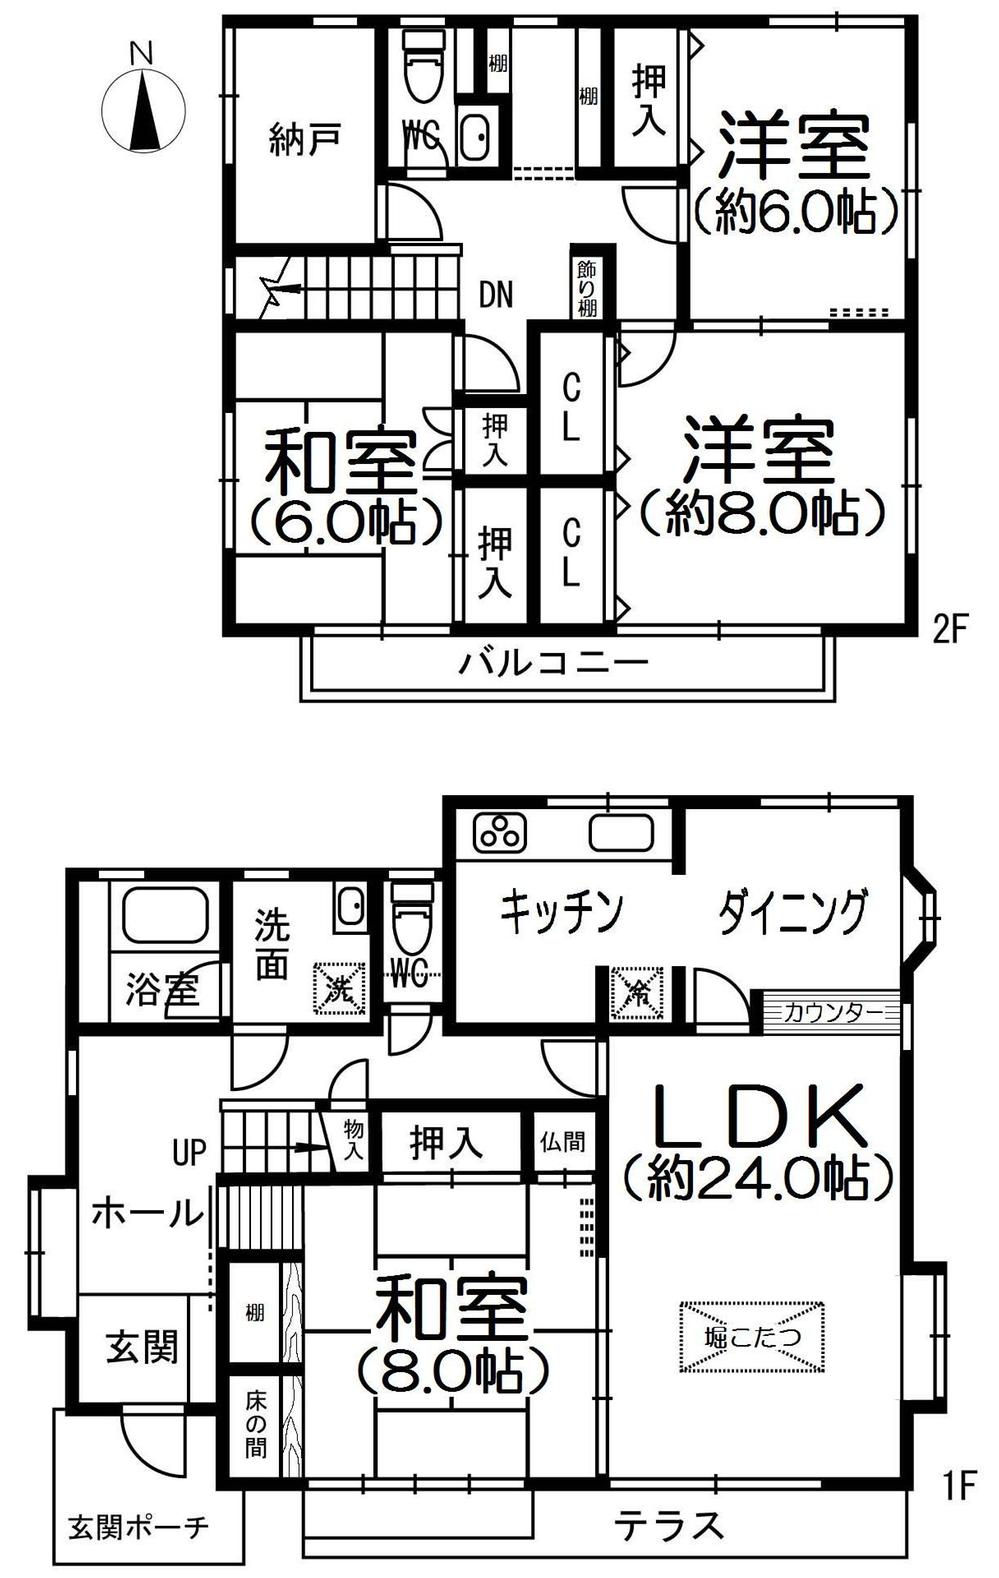 Floor plan. 22.5 million yen, 4LDK + S (storeroom), Land area 257.03 sq m , Building area 137.83 sq m